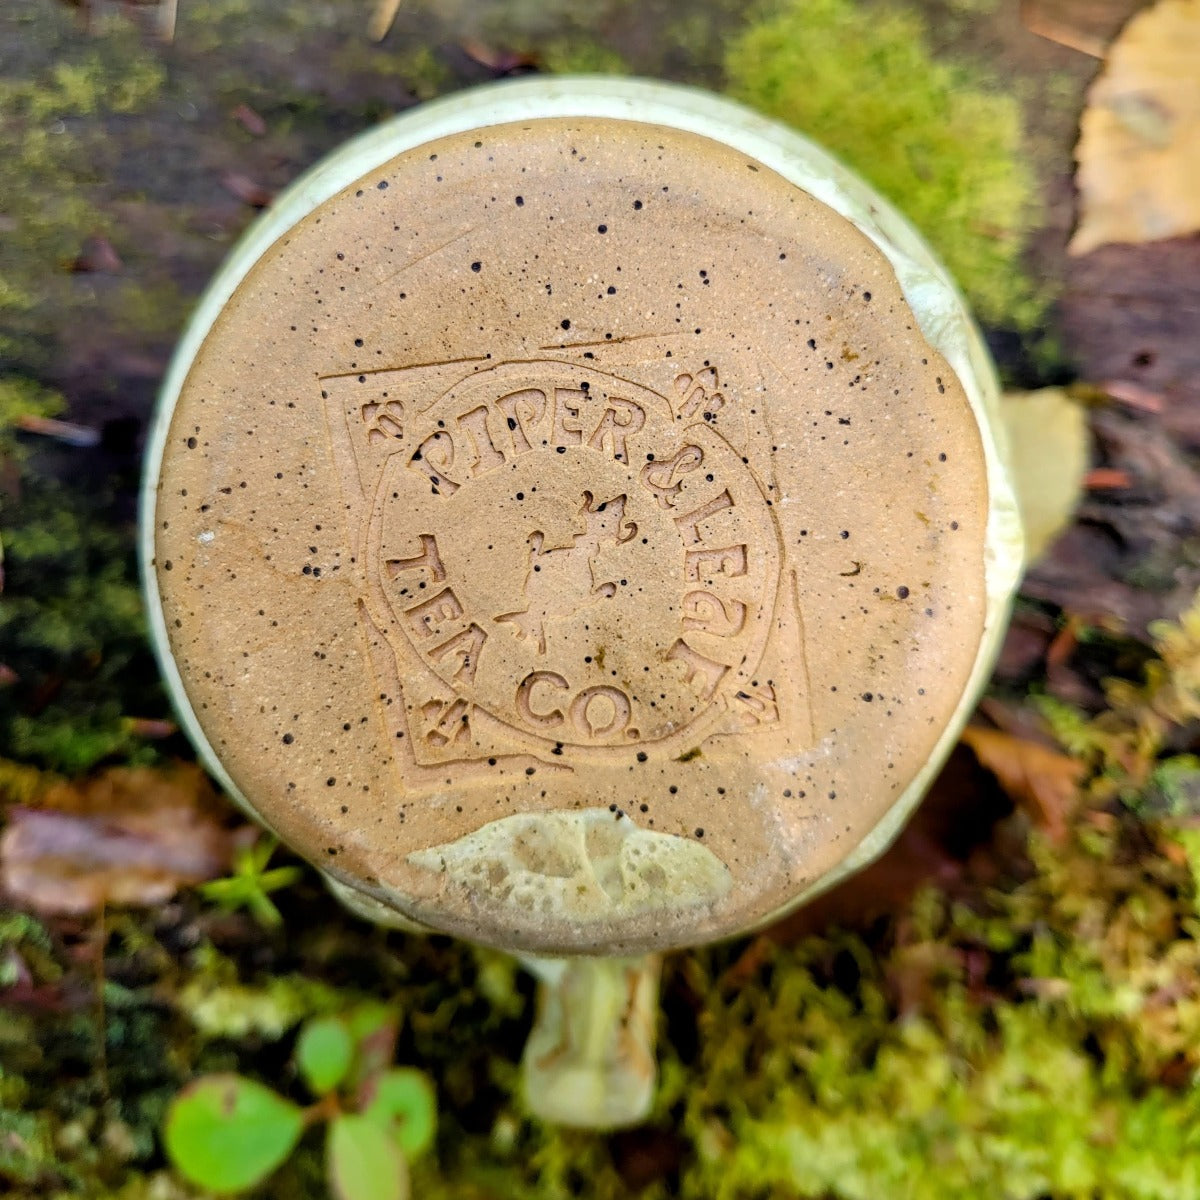 Bottom look at the handmade pottery mug "HOT-TEA" with Piper & Leaf diamond logo